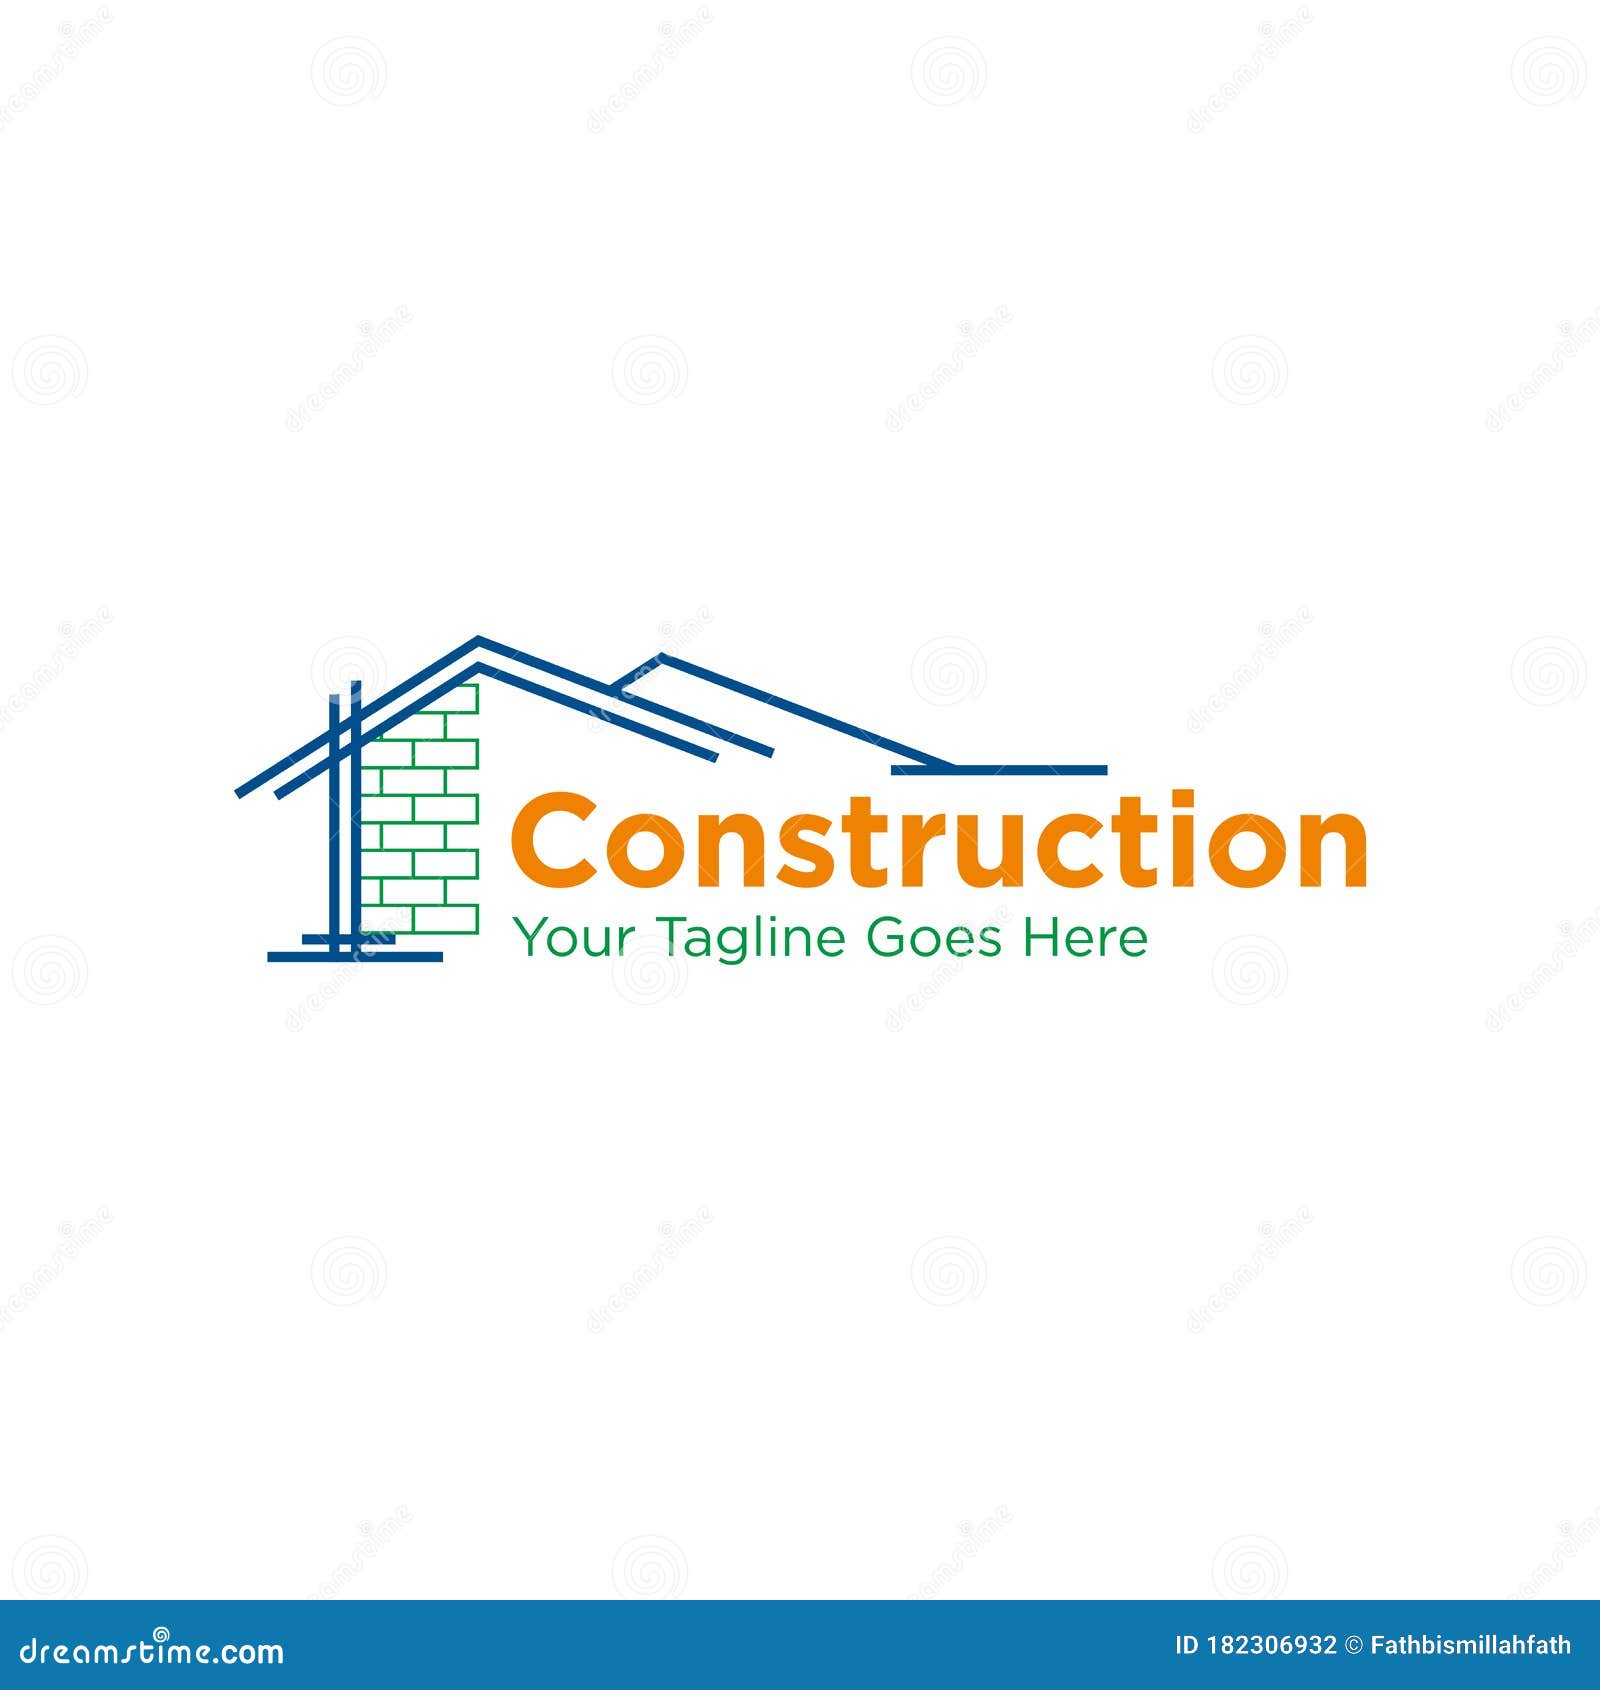 Construction Company Logo Design Vector Template. Building Company ...